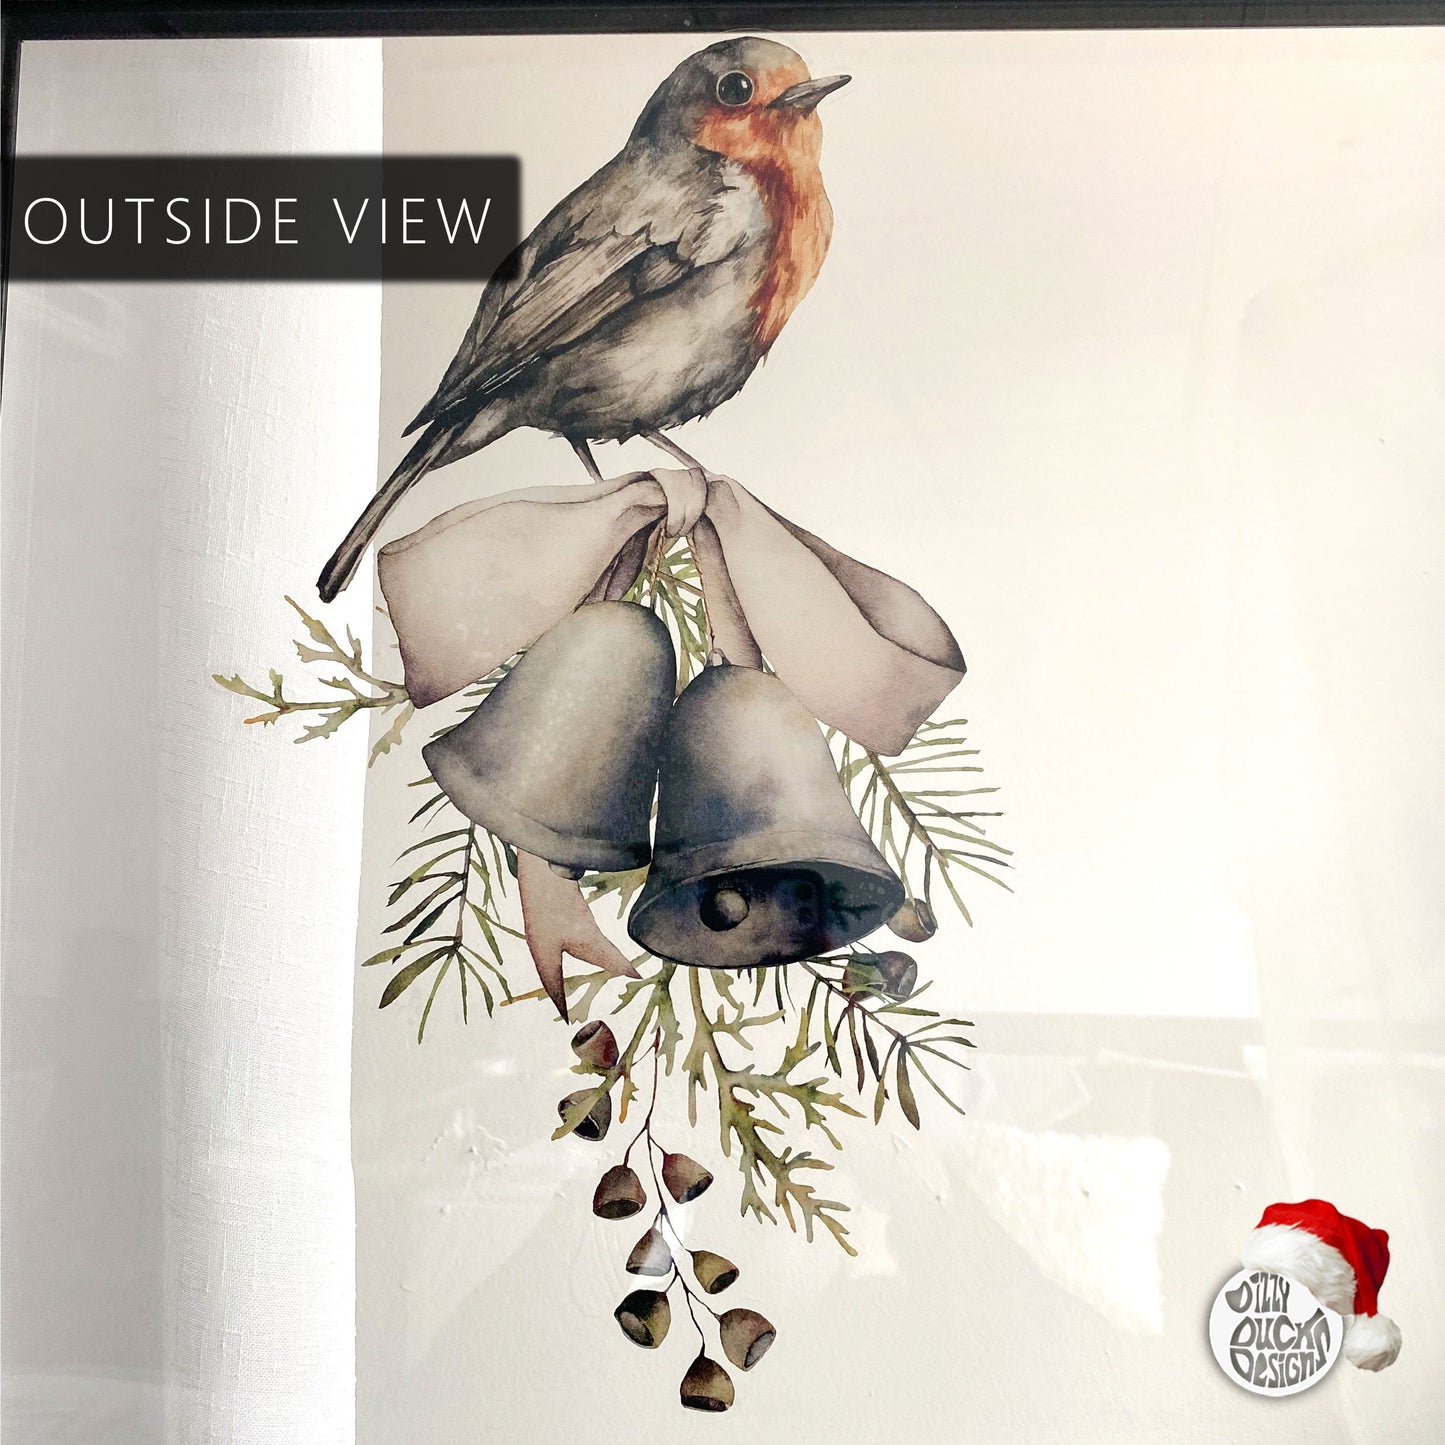 Decal Christmas Robin On Bells Window Decal Dizzy Duck Designs